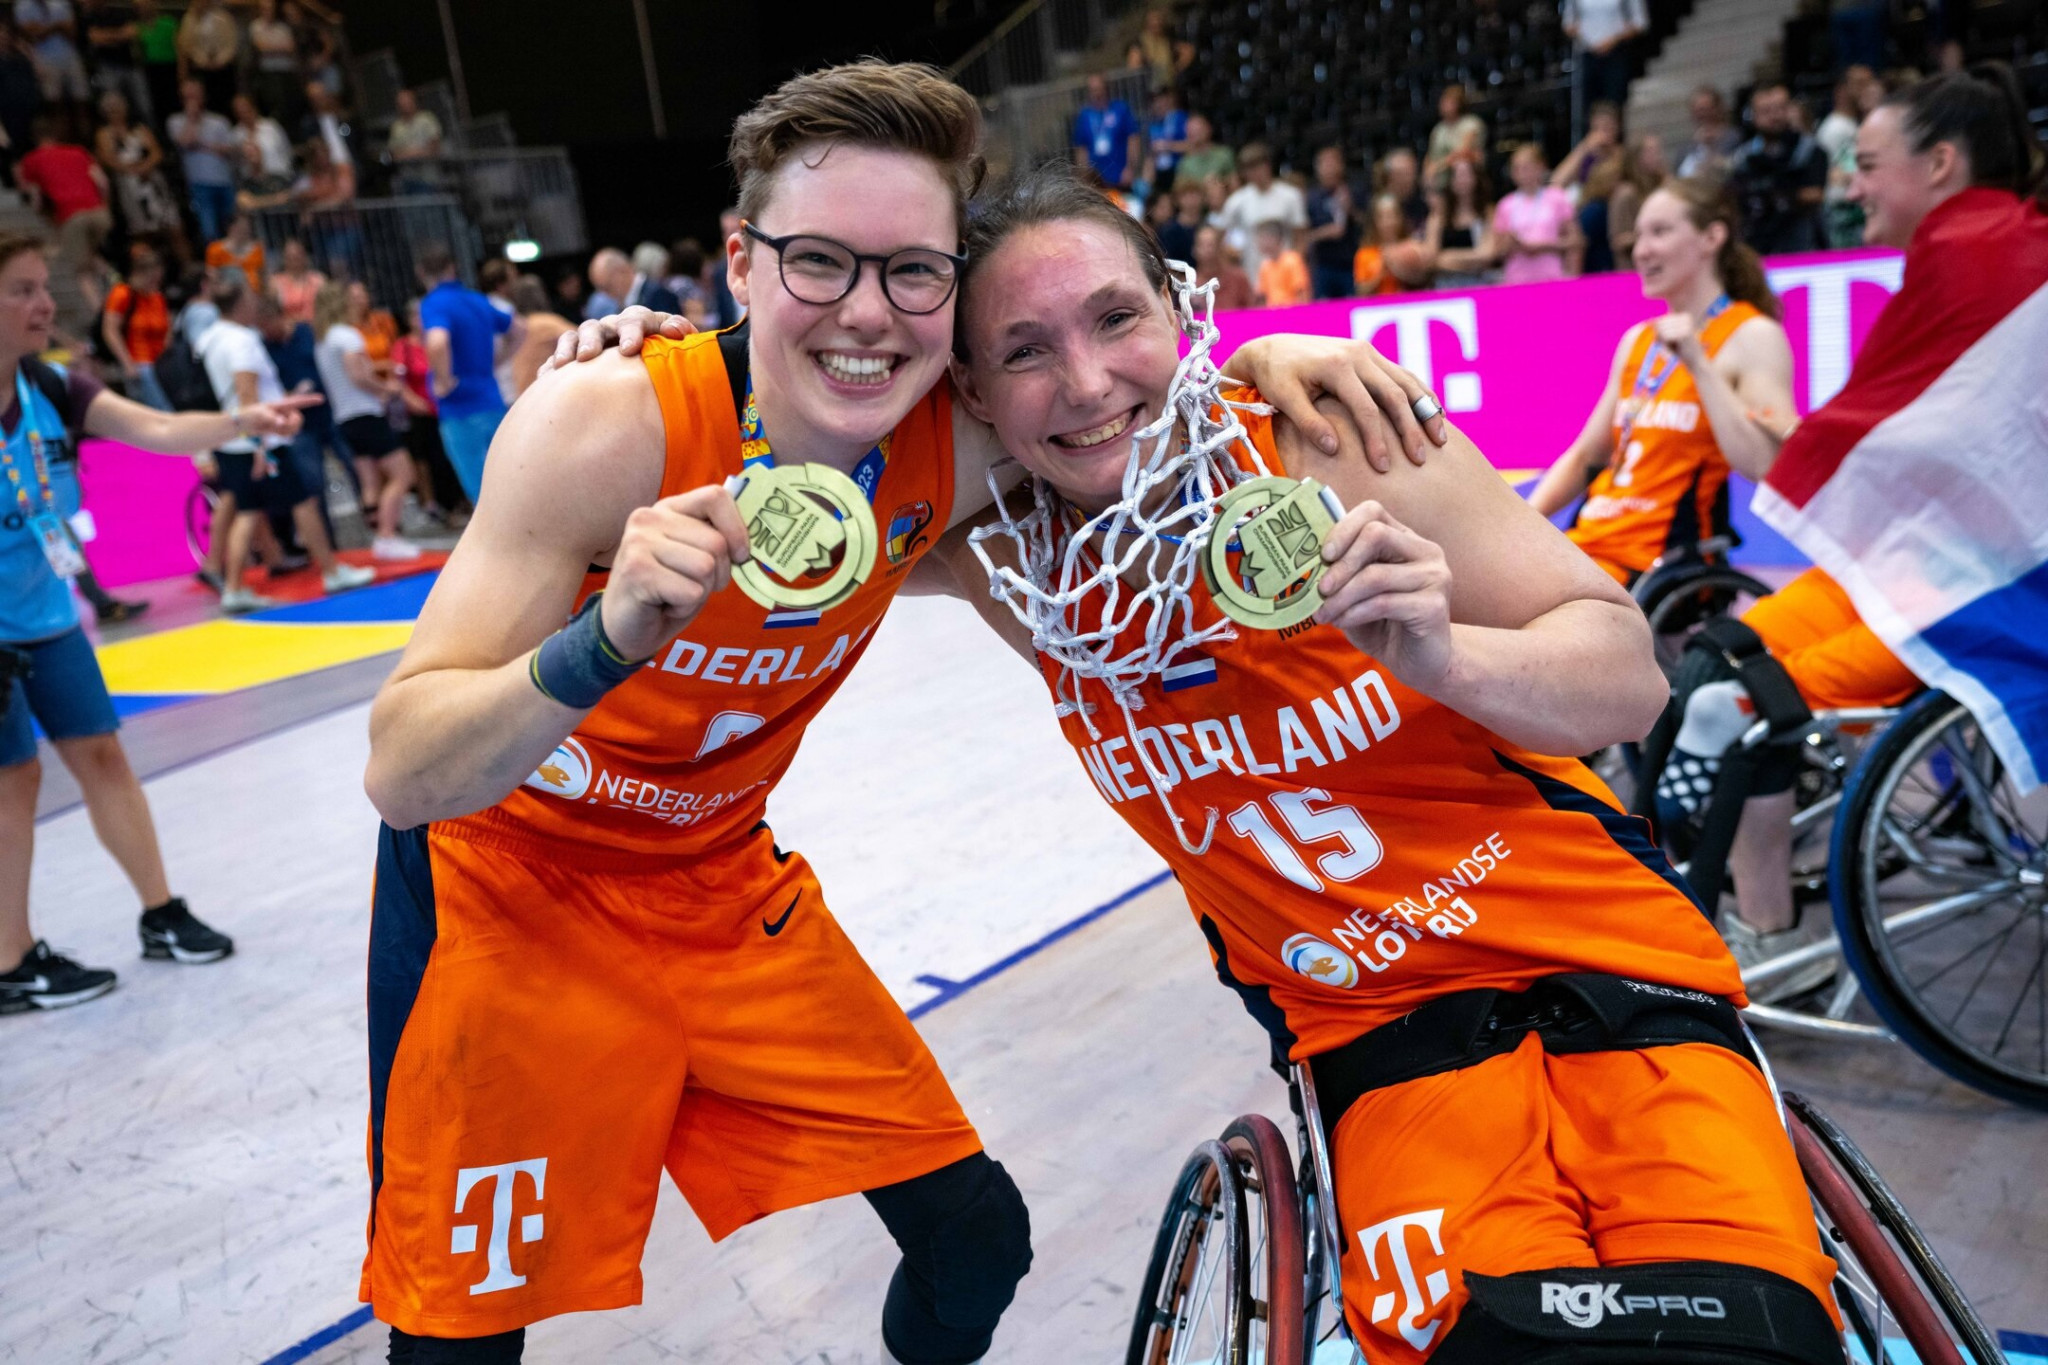 Hosts Netherlands claim fourth straight European wheelchair basketball crown